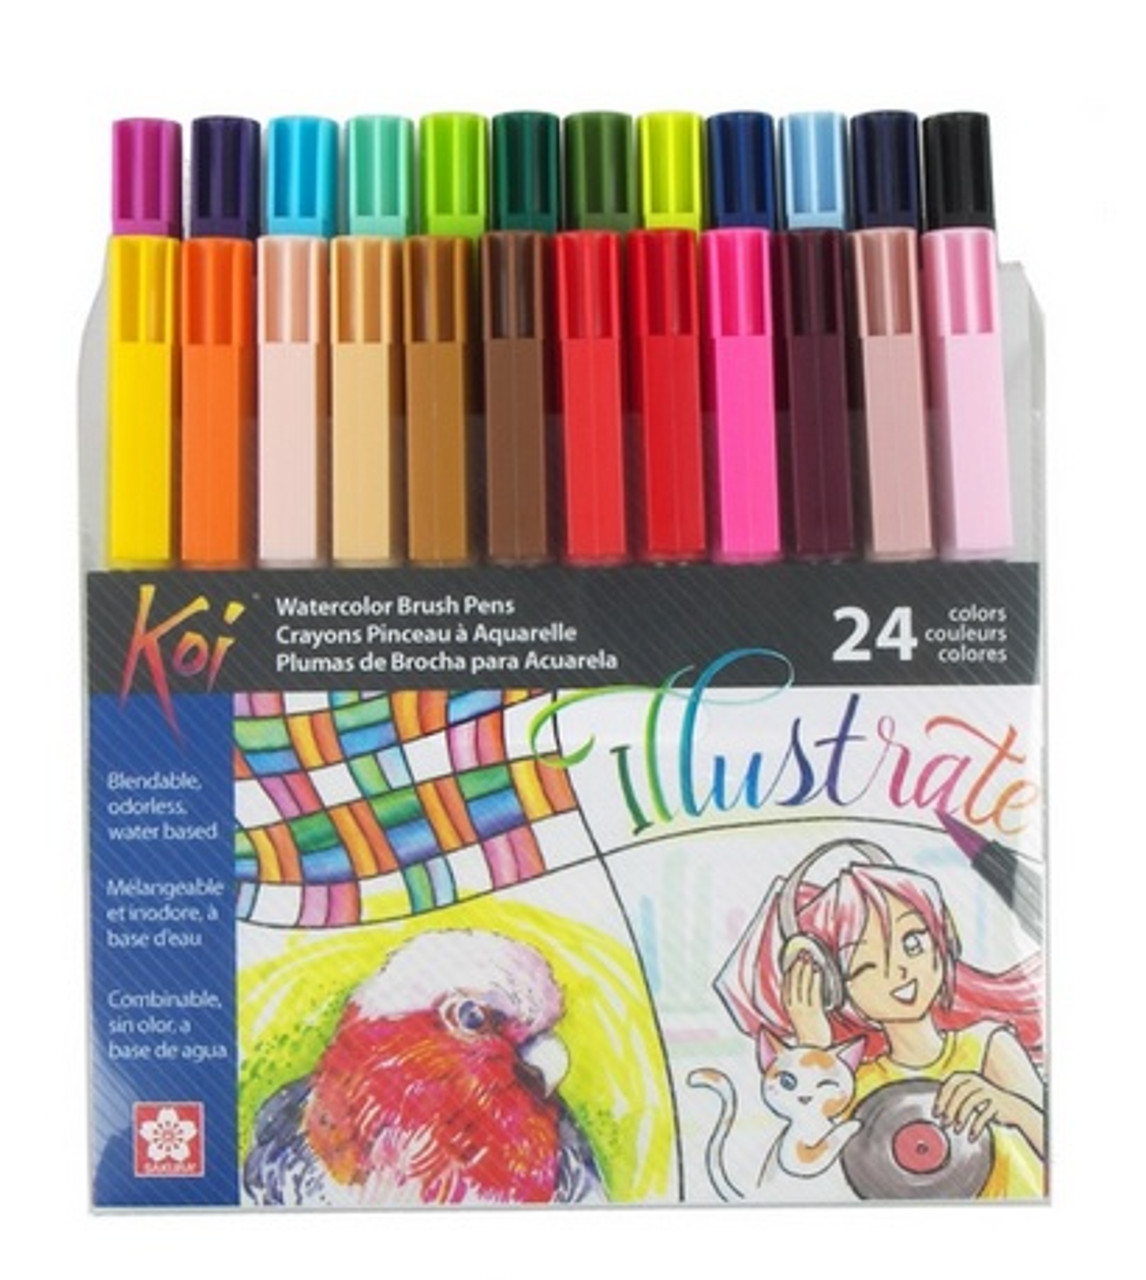 Sakura Koi Coloring Brush Pens and Sets